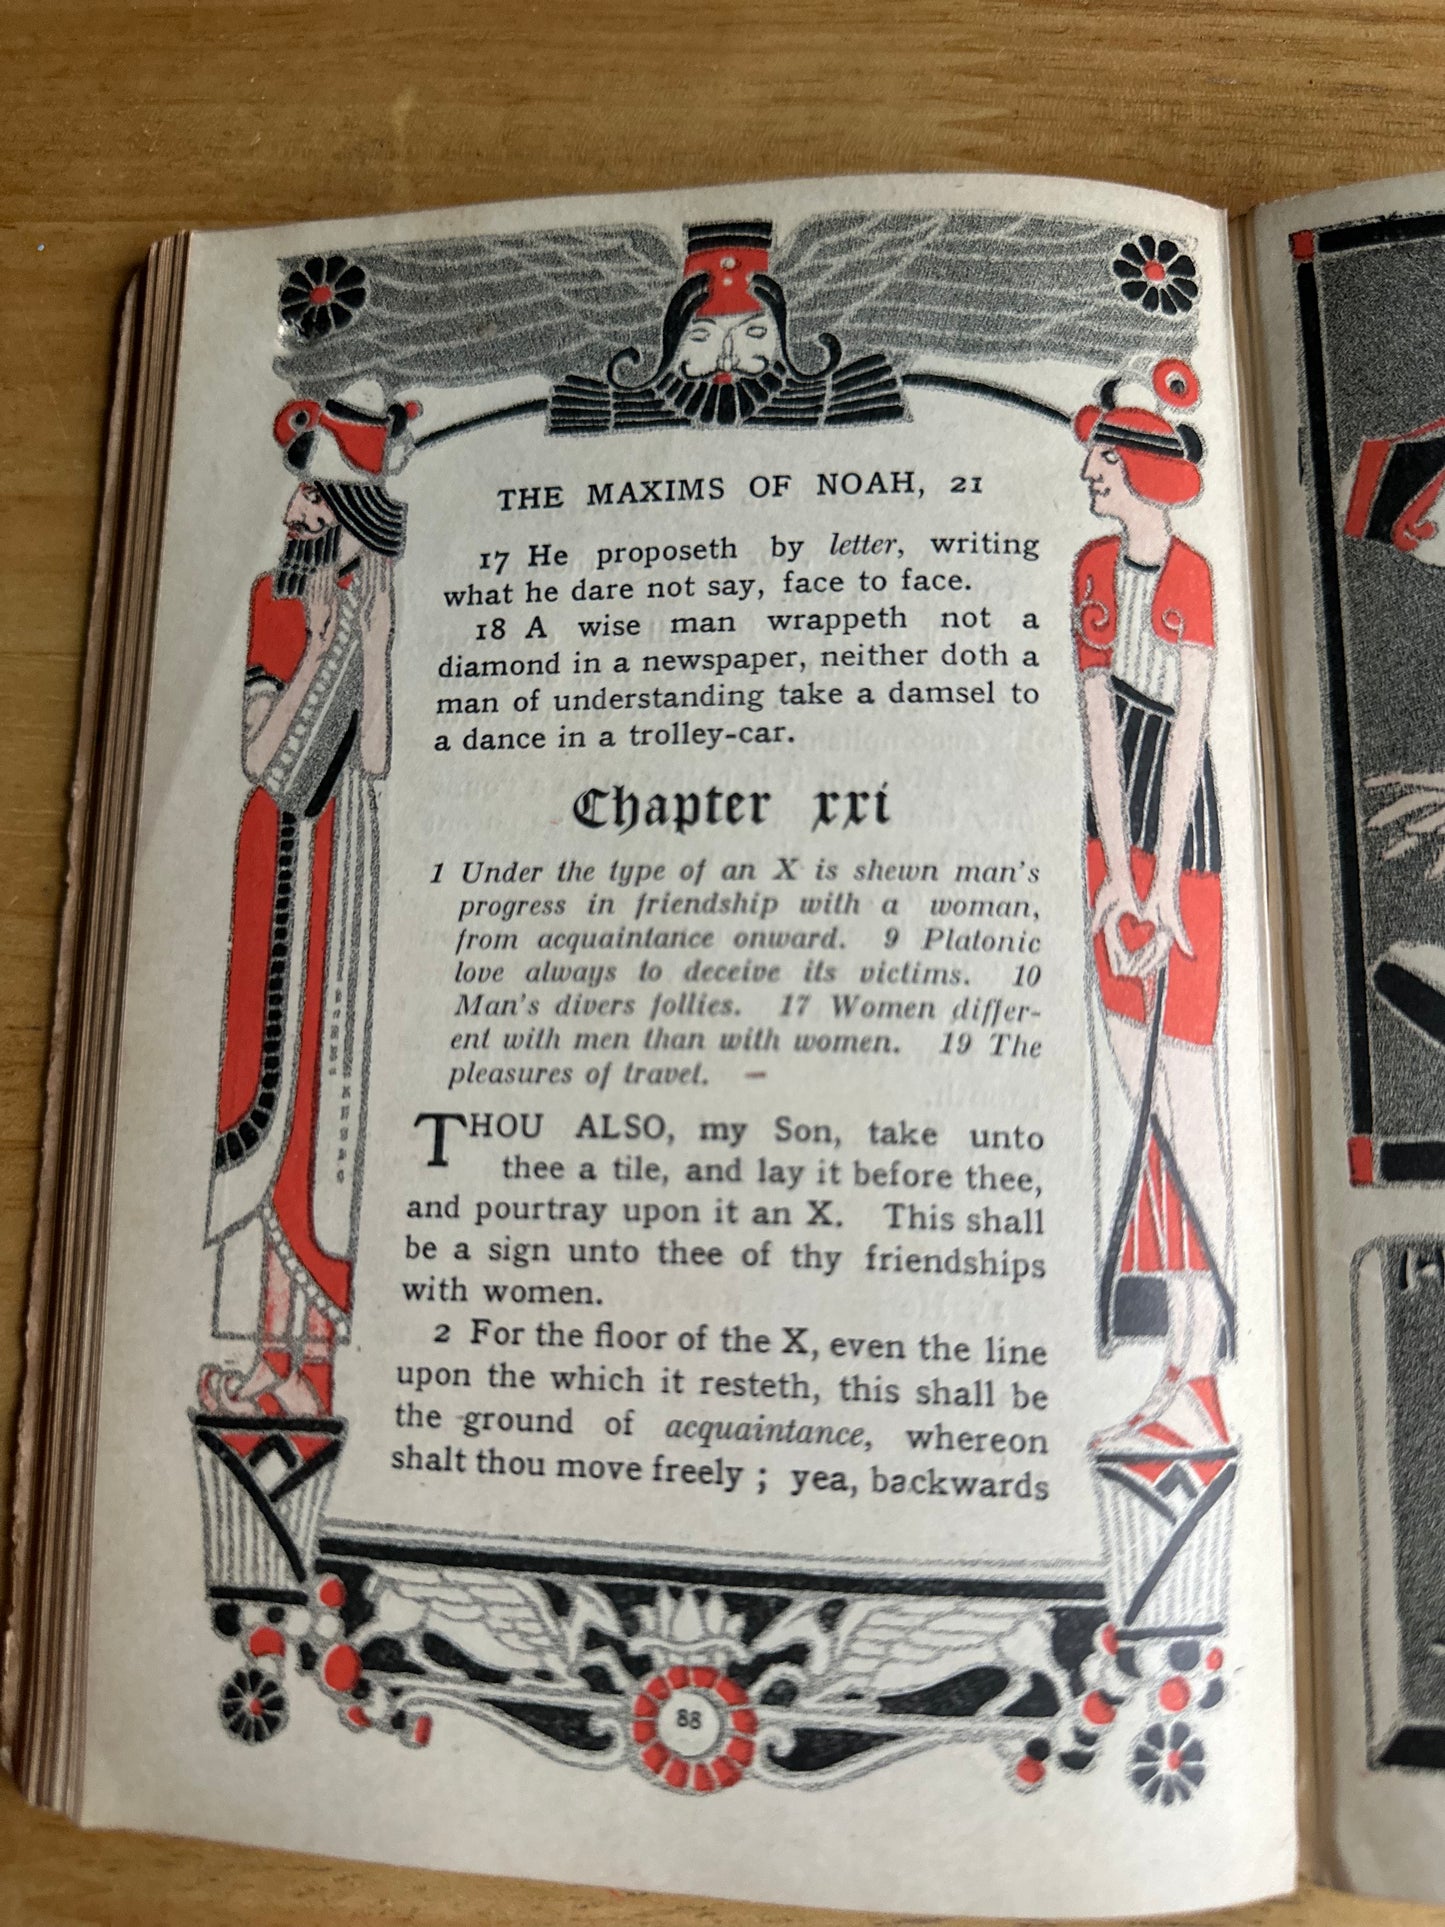 1919 The Maxims Of Noah - Gelett Burgess(Louis D. Fancher illustration)Simpkin, Marshall, Hamilton, Kent & Co Ltd.